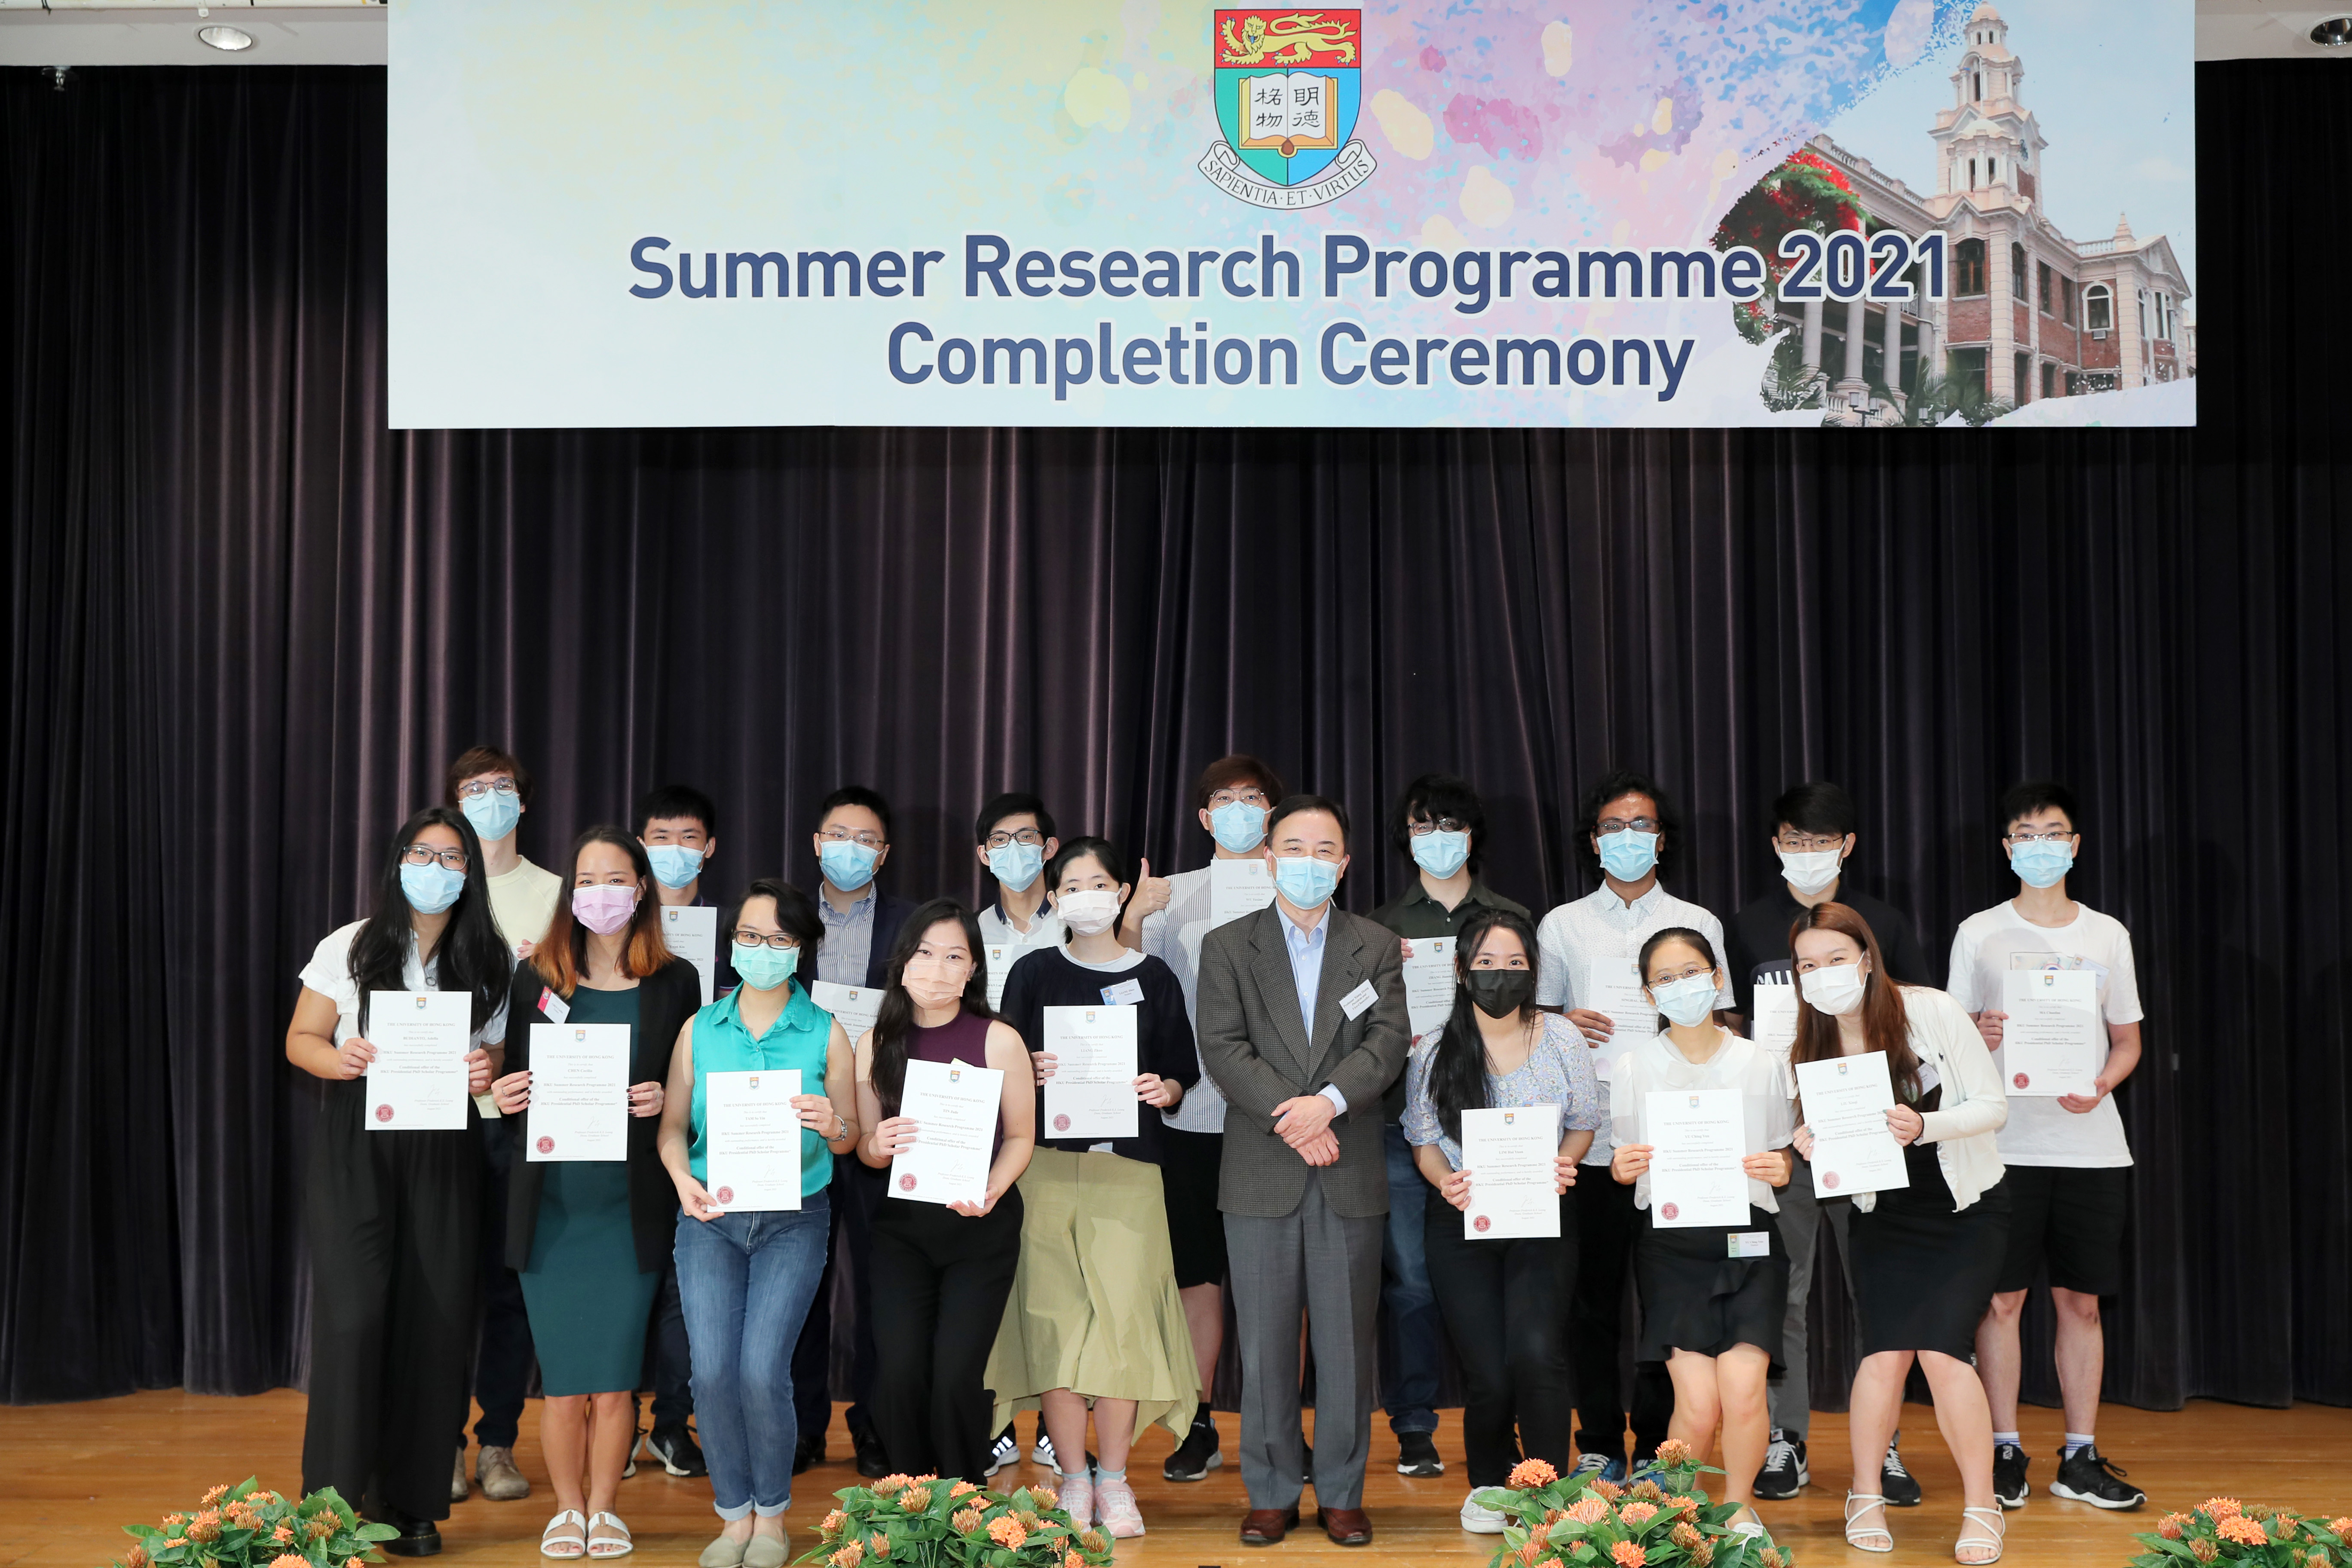 HKU 2021 Summer Research Programme